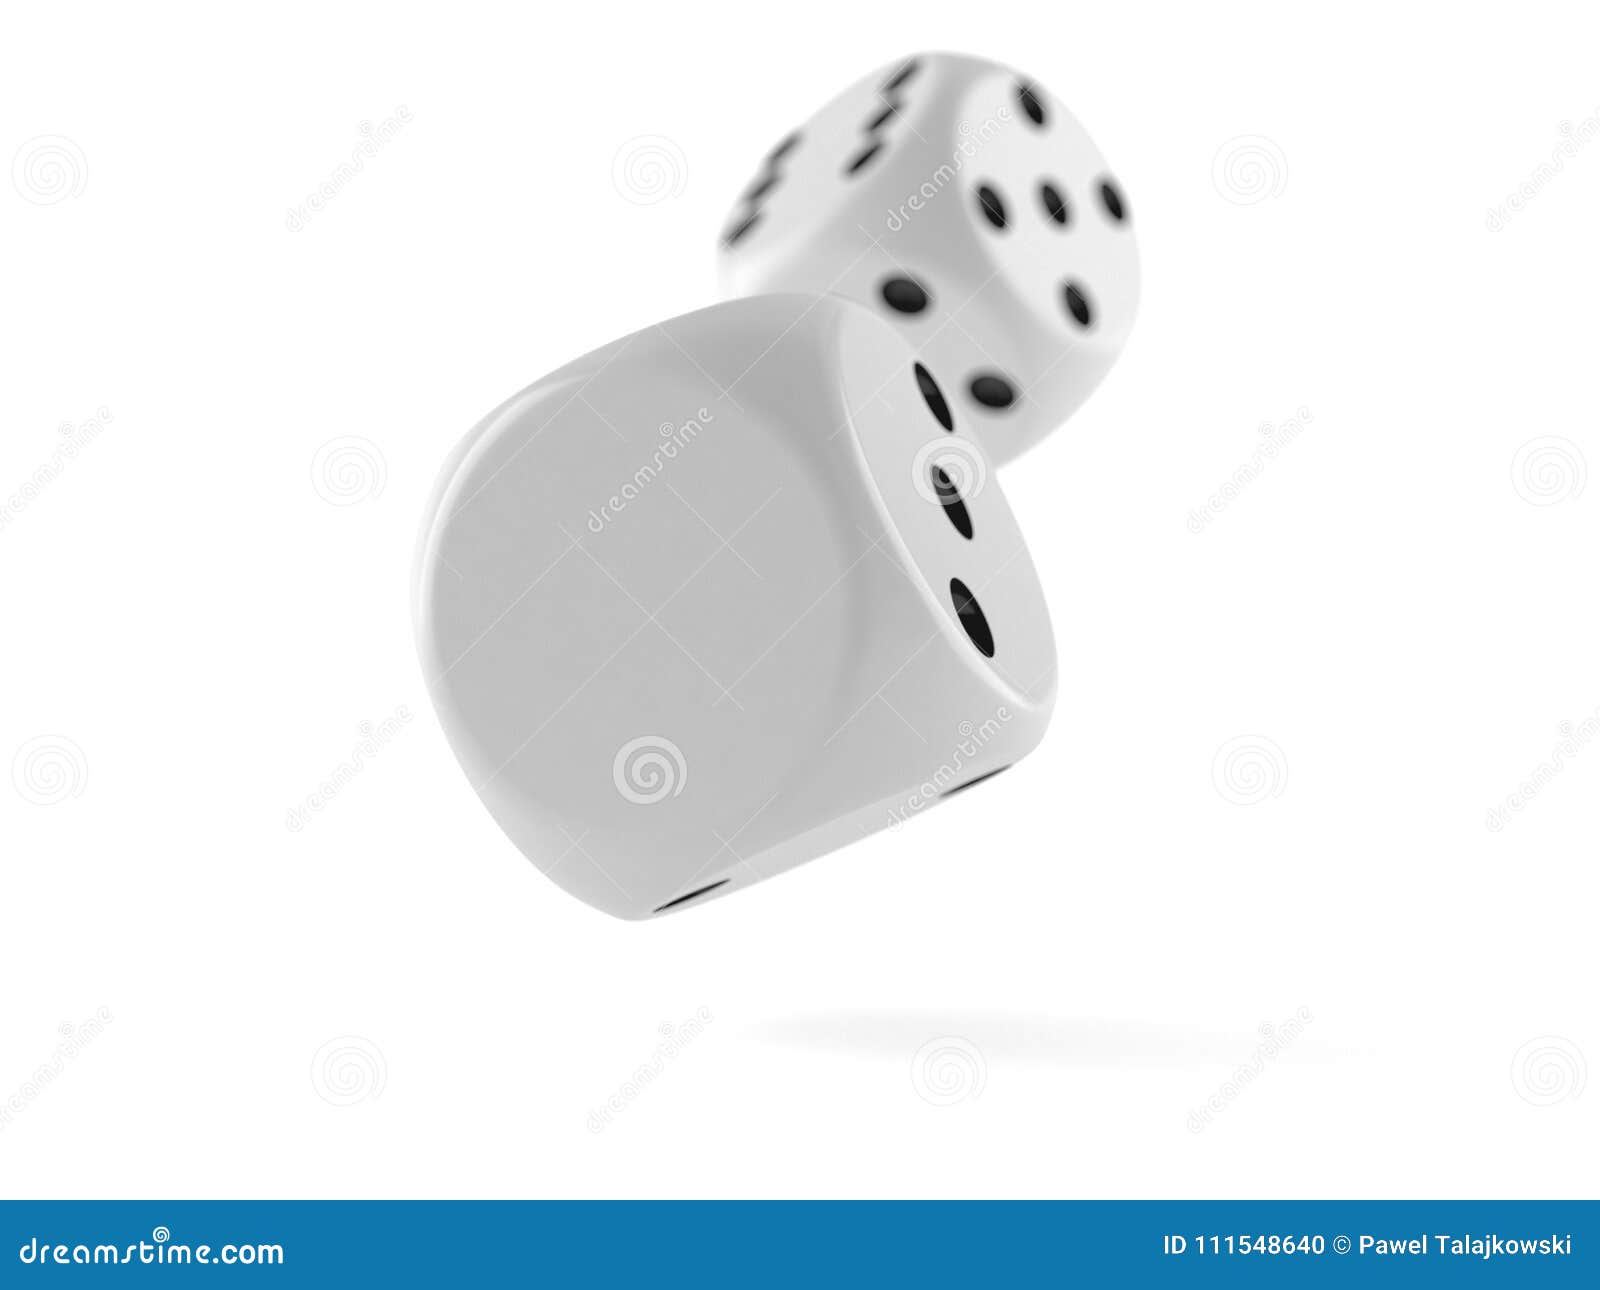 Blank dice stock illustration. Illustration of gambling - 111548640